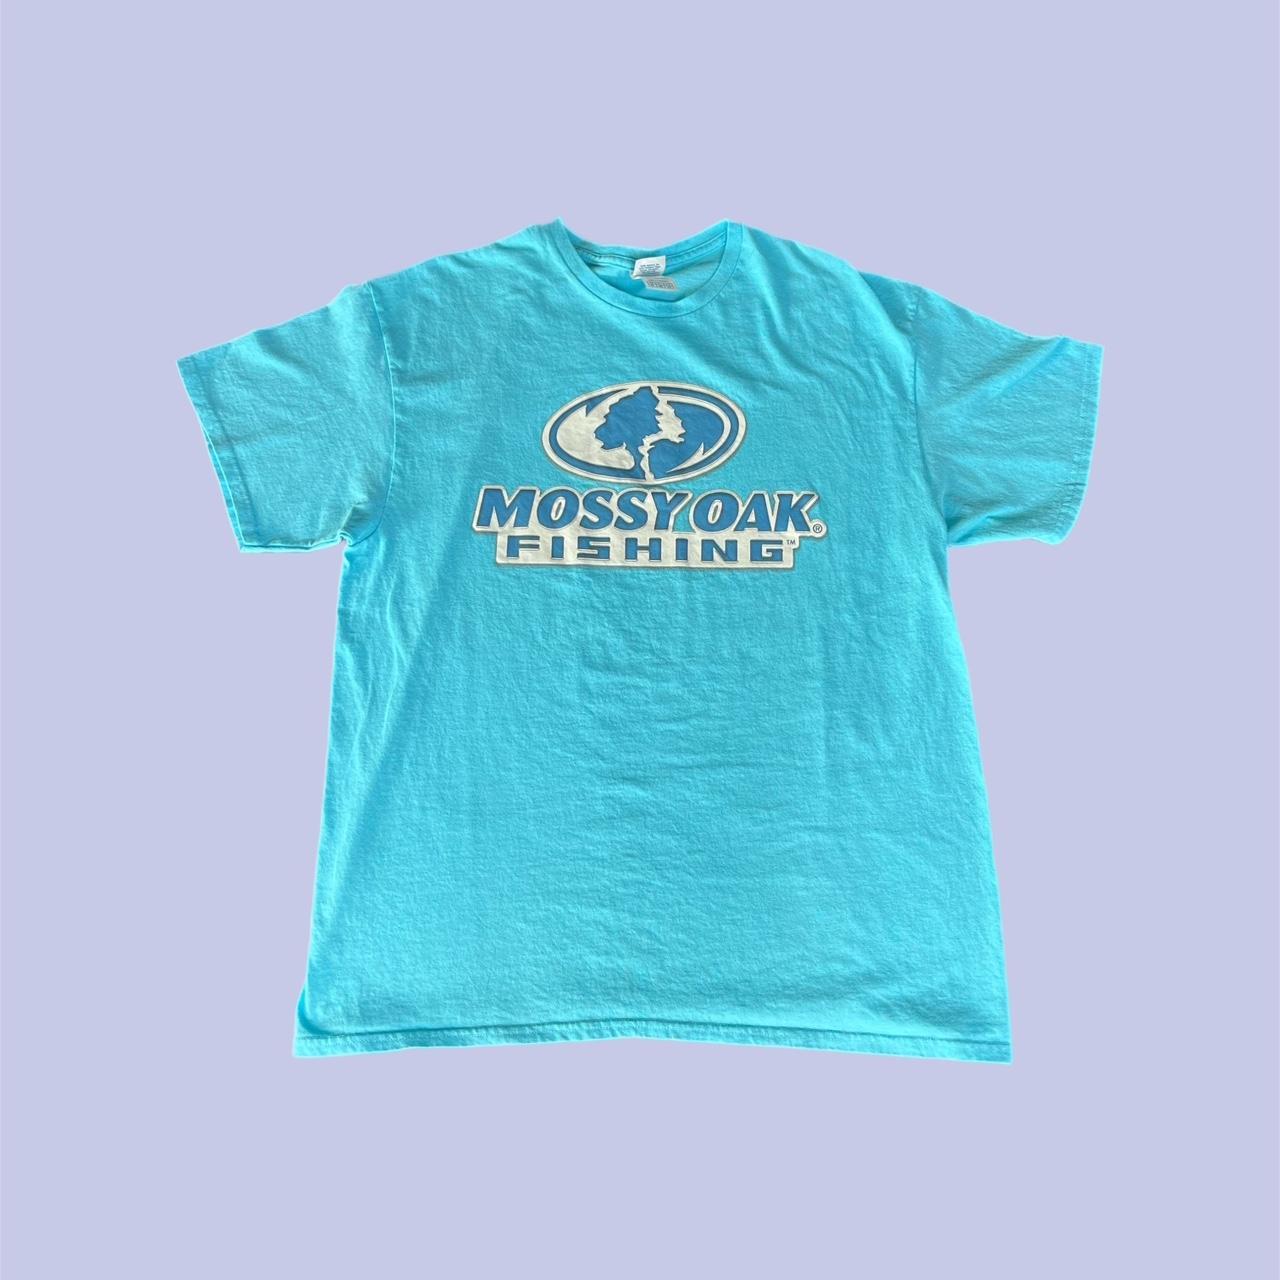 Mossy Oak Men's T-Shirt - Blue - XL